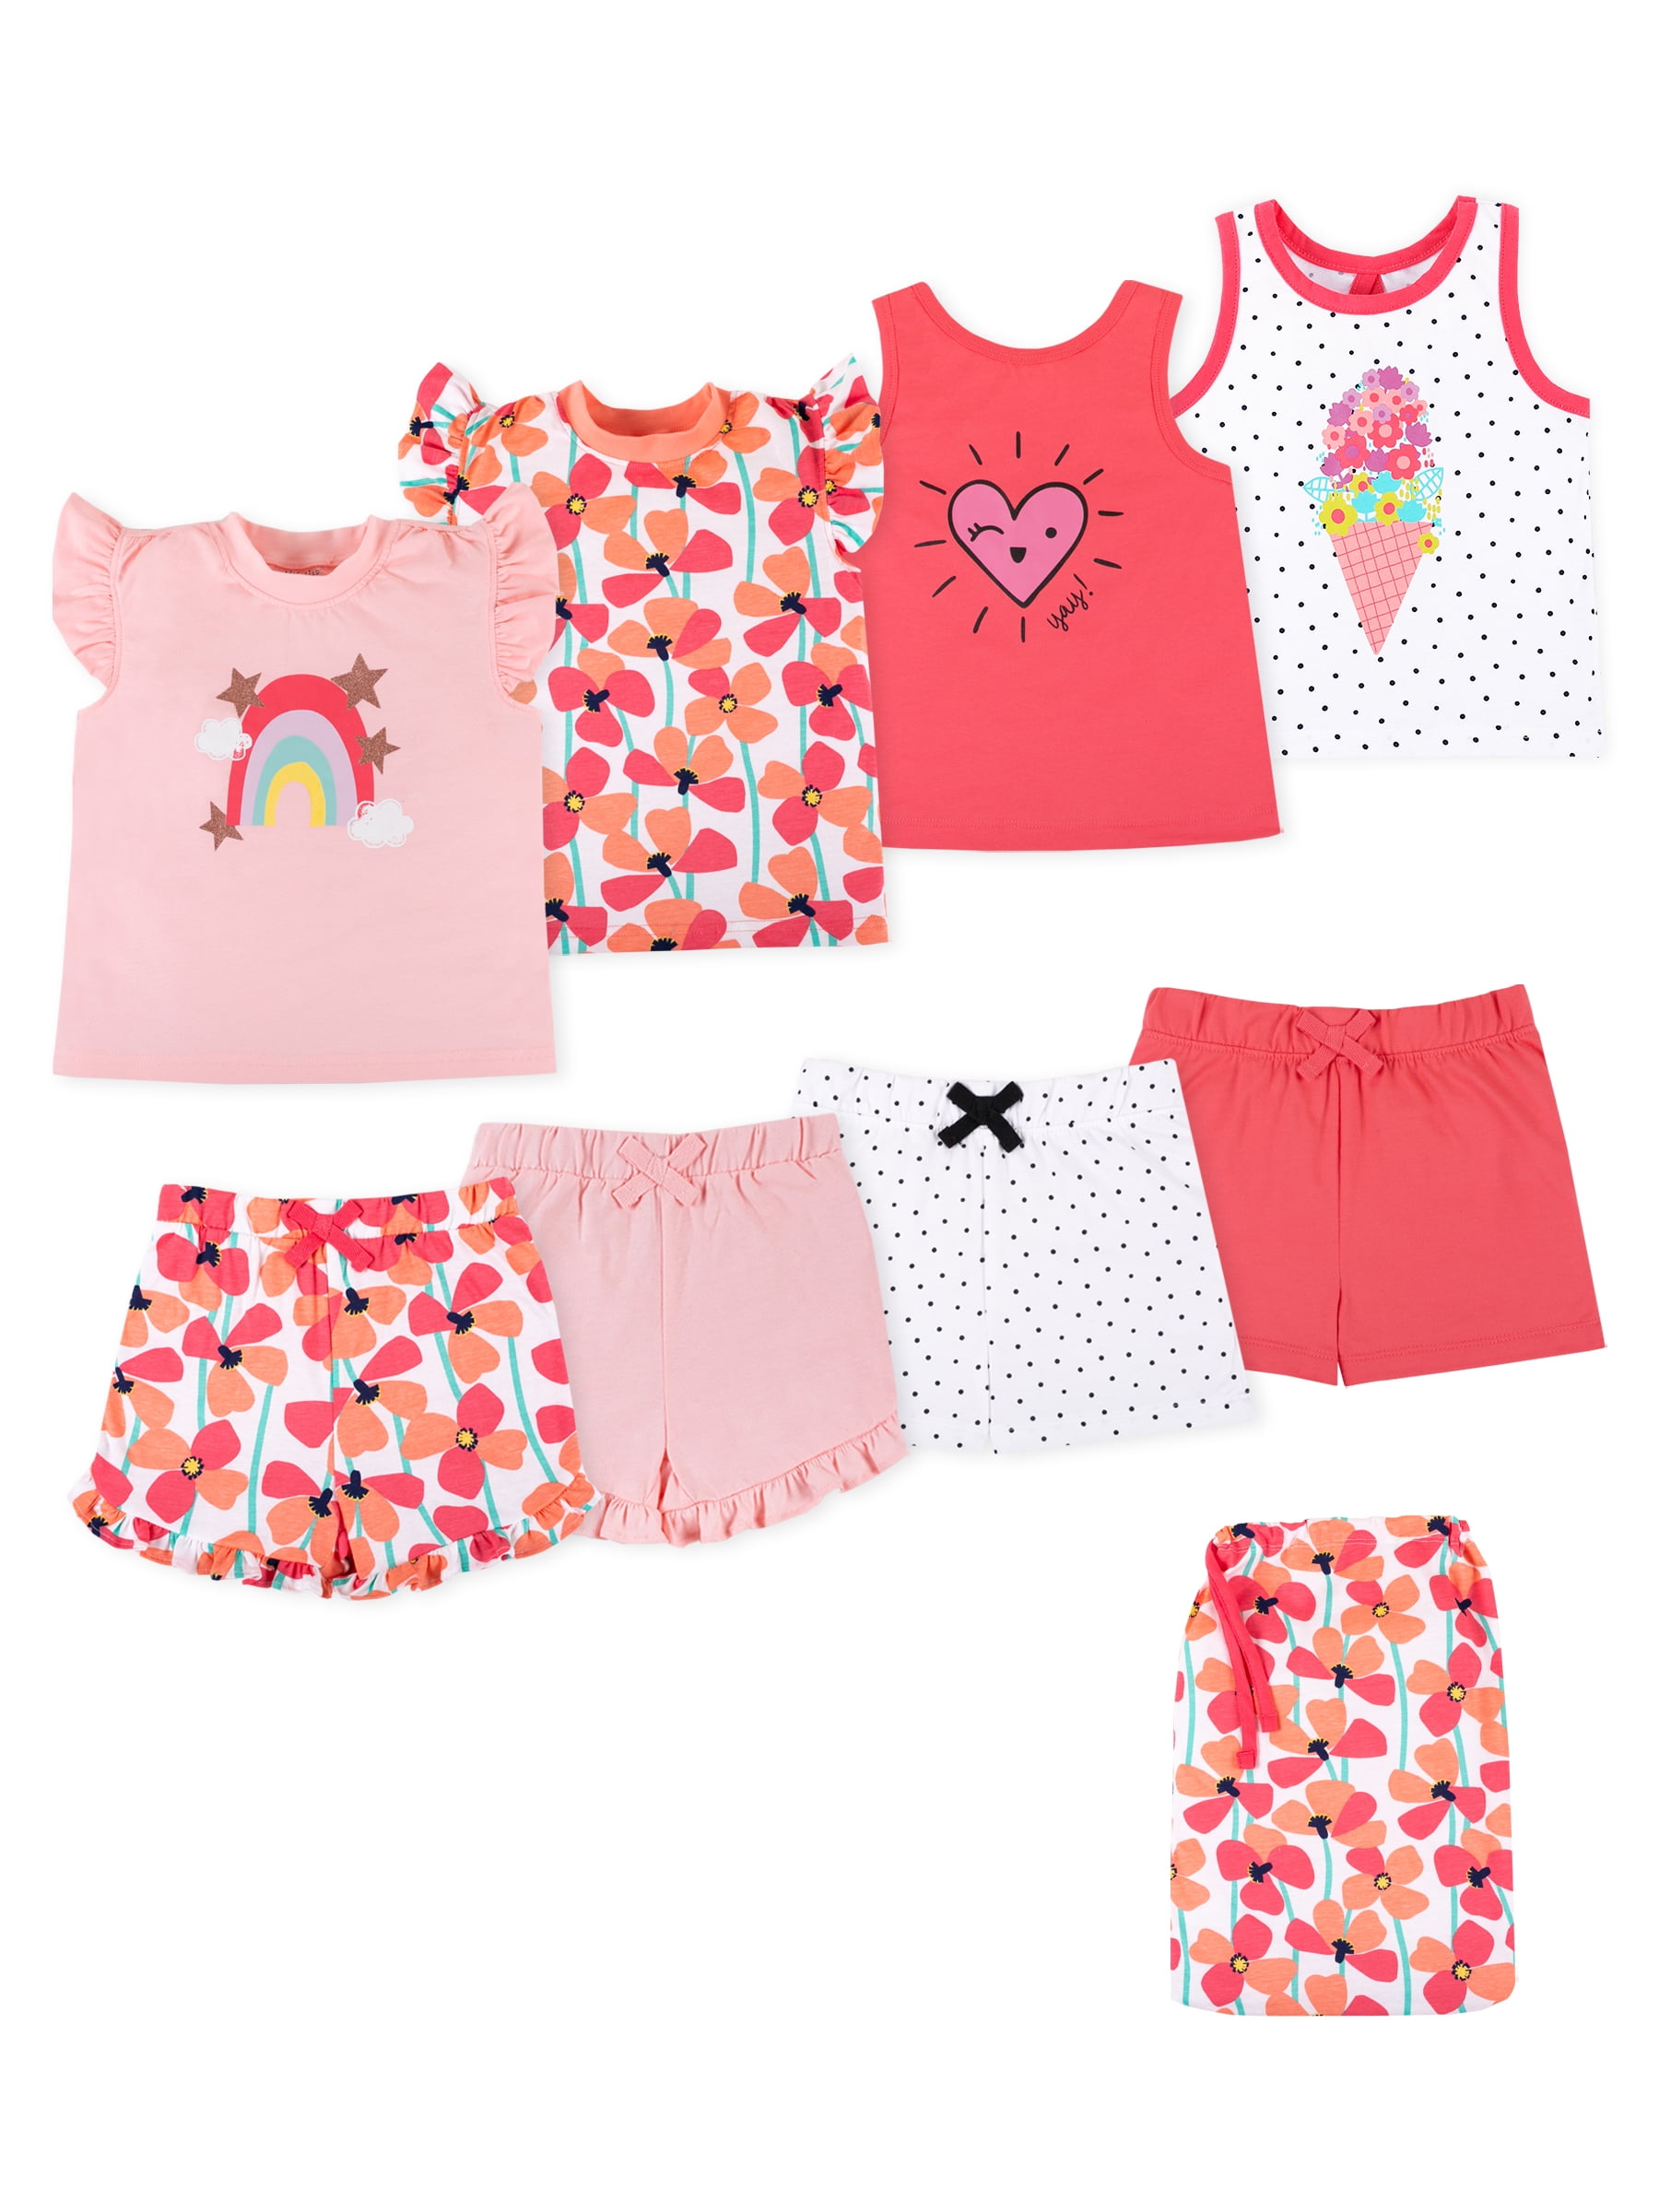 NEW Baby Girls 2 pc Set Size 12 Month Tank Top Shirt Purple Pink Love Bug Shorts 